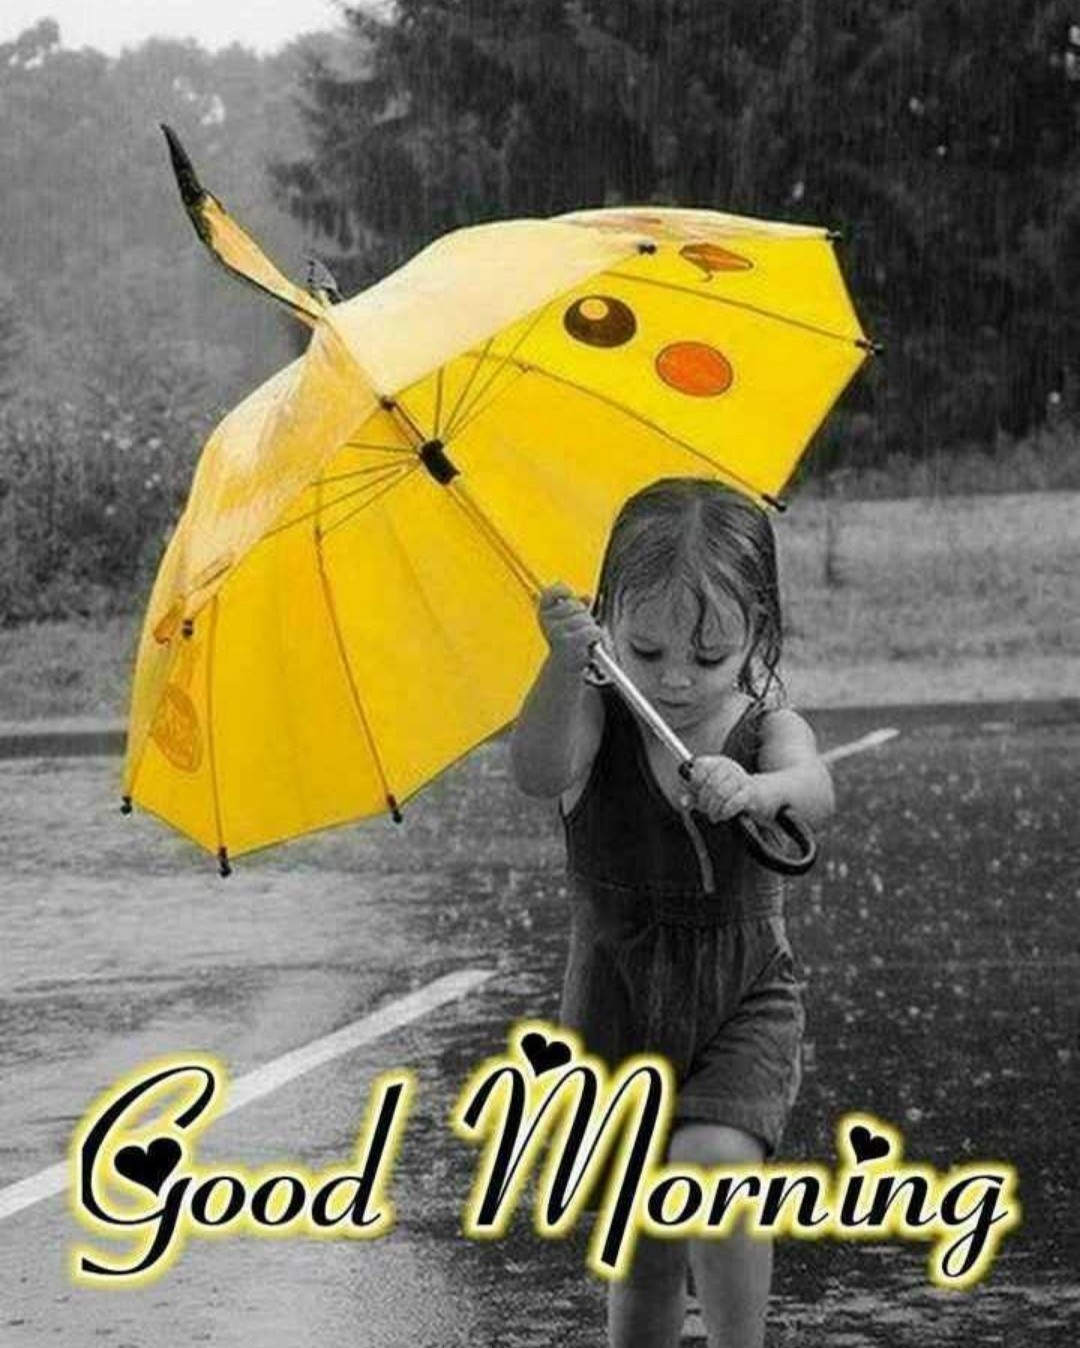 New 631 Good Morning Image - Cute Girl In Rain - HD Wallpaper 